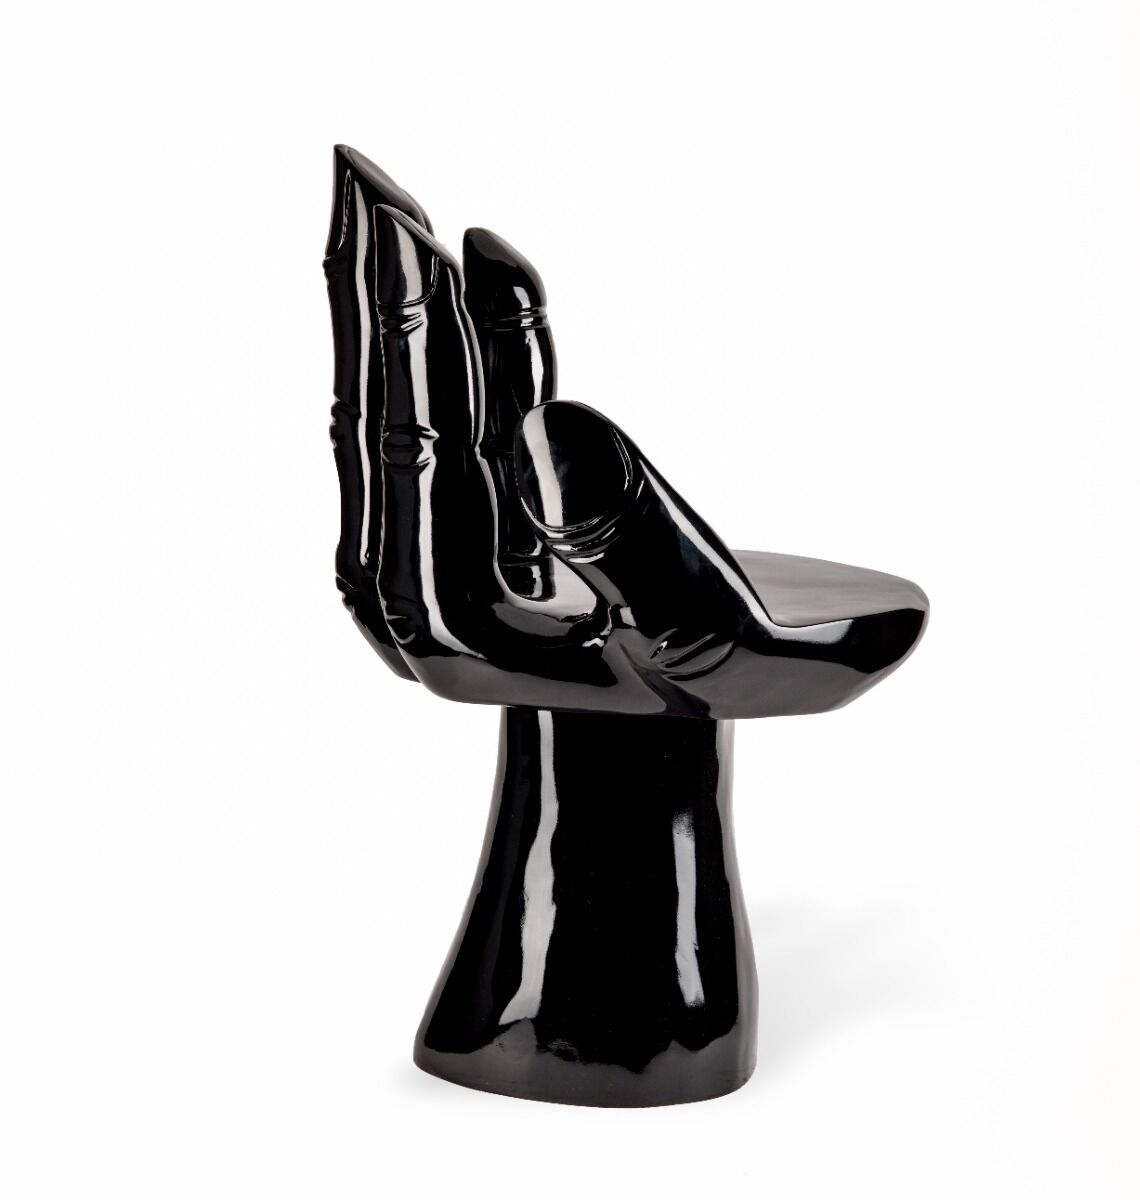 Pols Potten Hand Chair